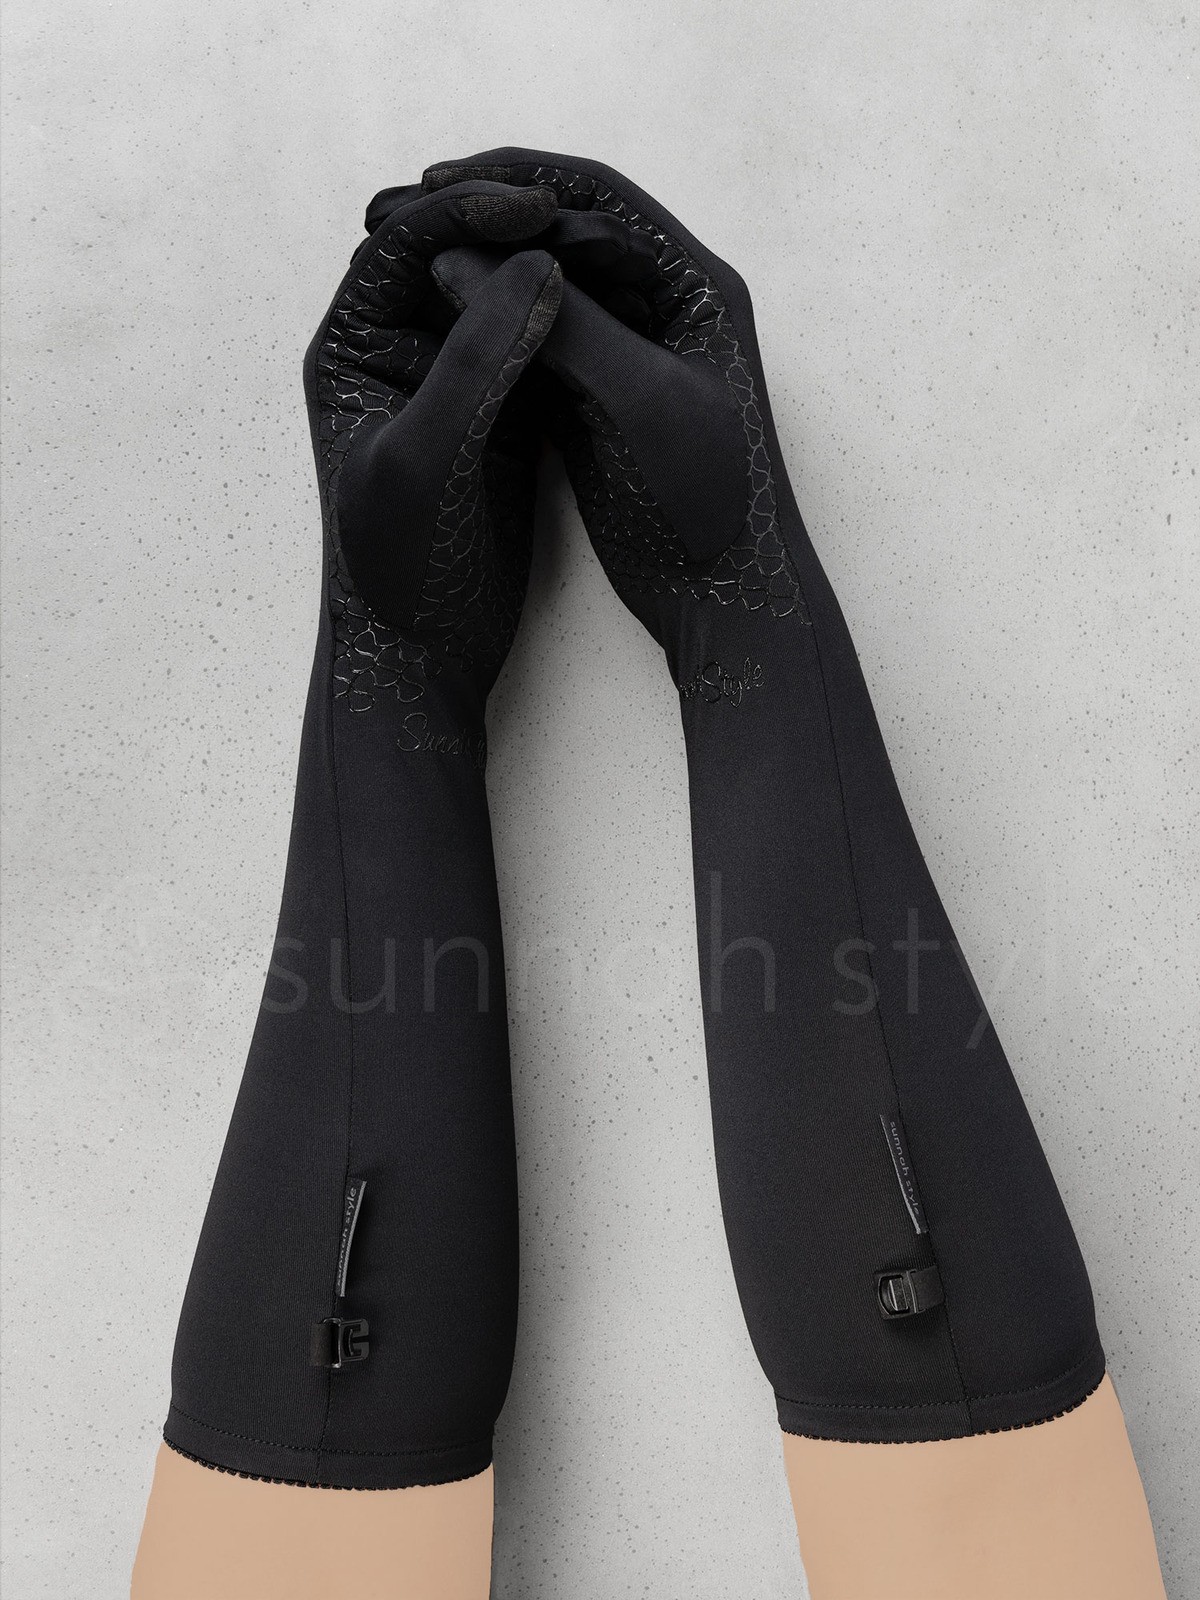 Esteem Signature Gloves v2 - Forearm Length